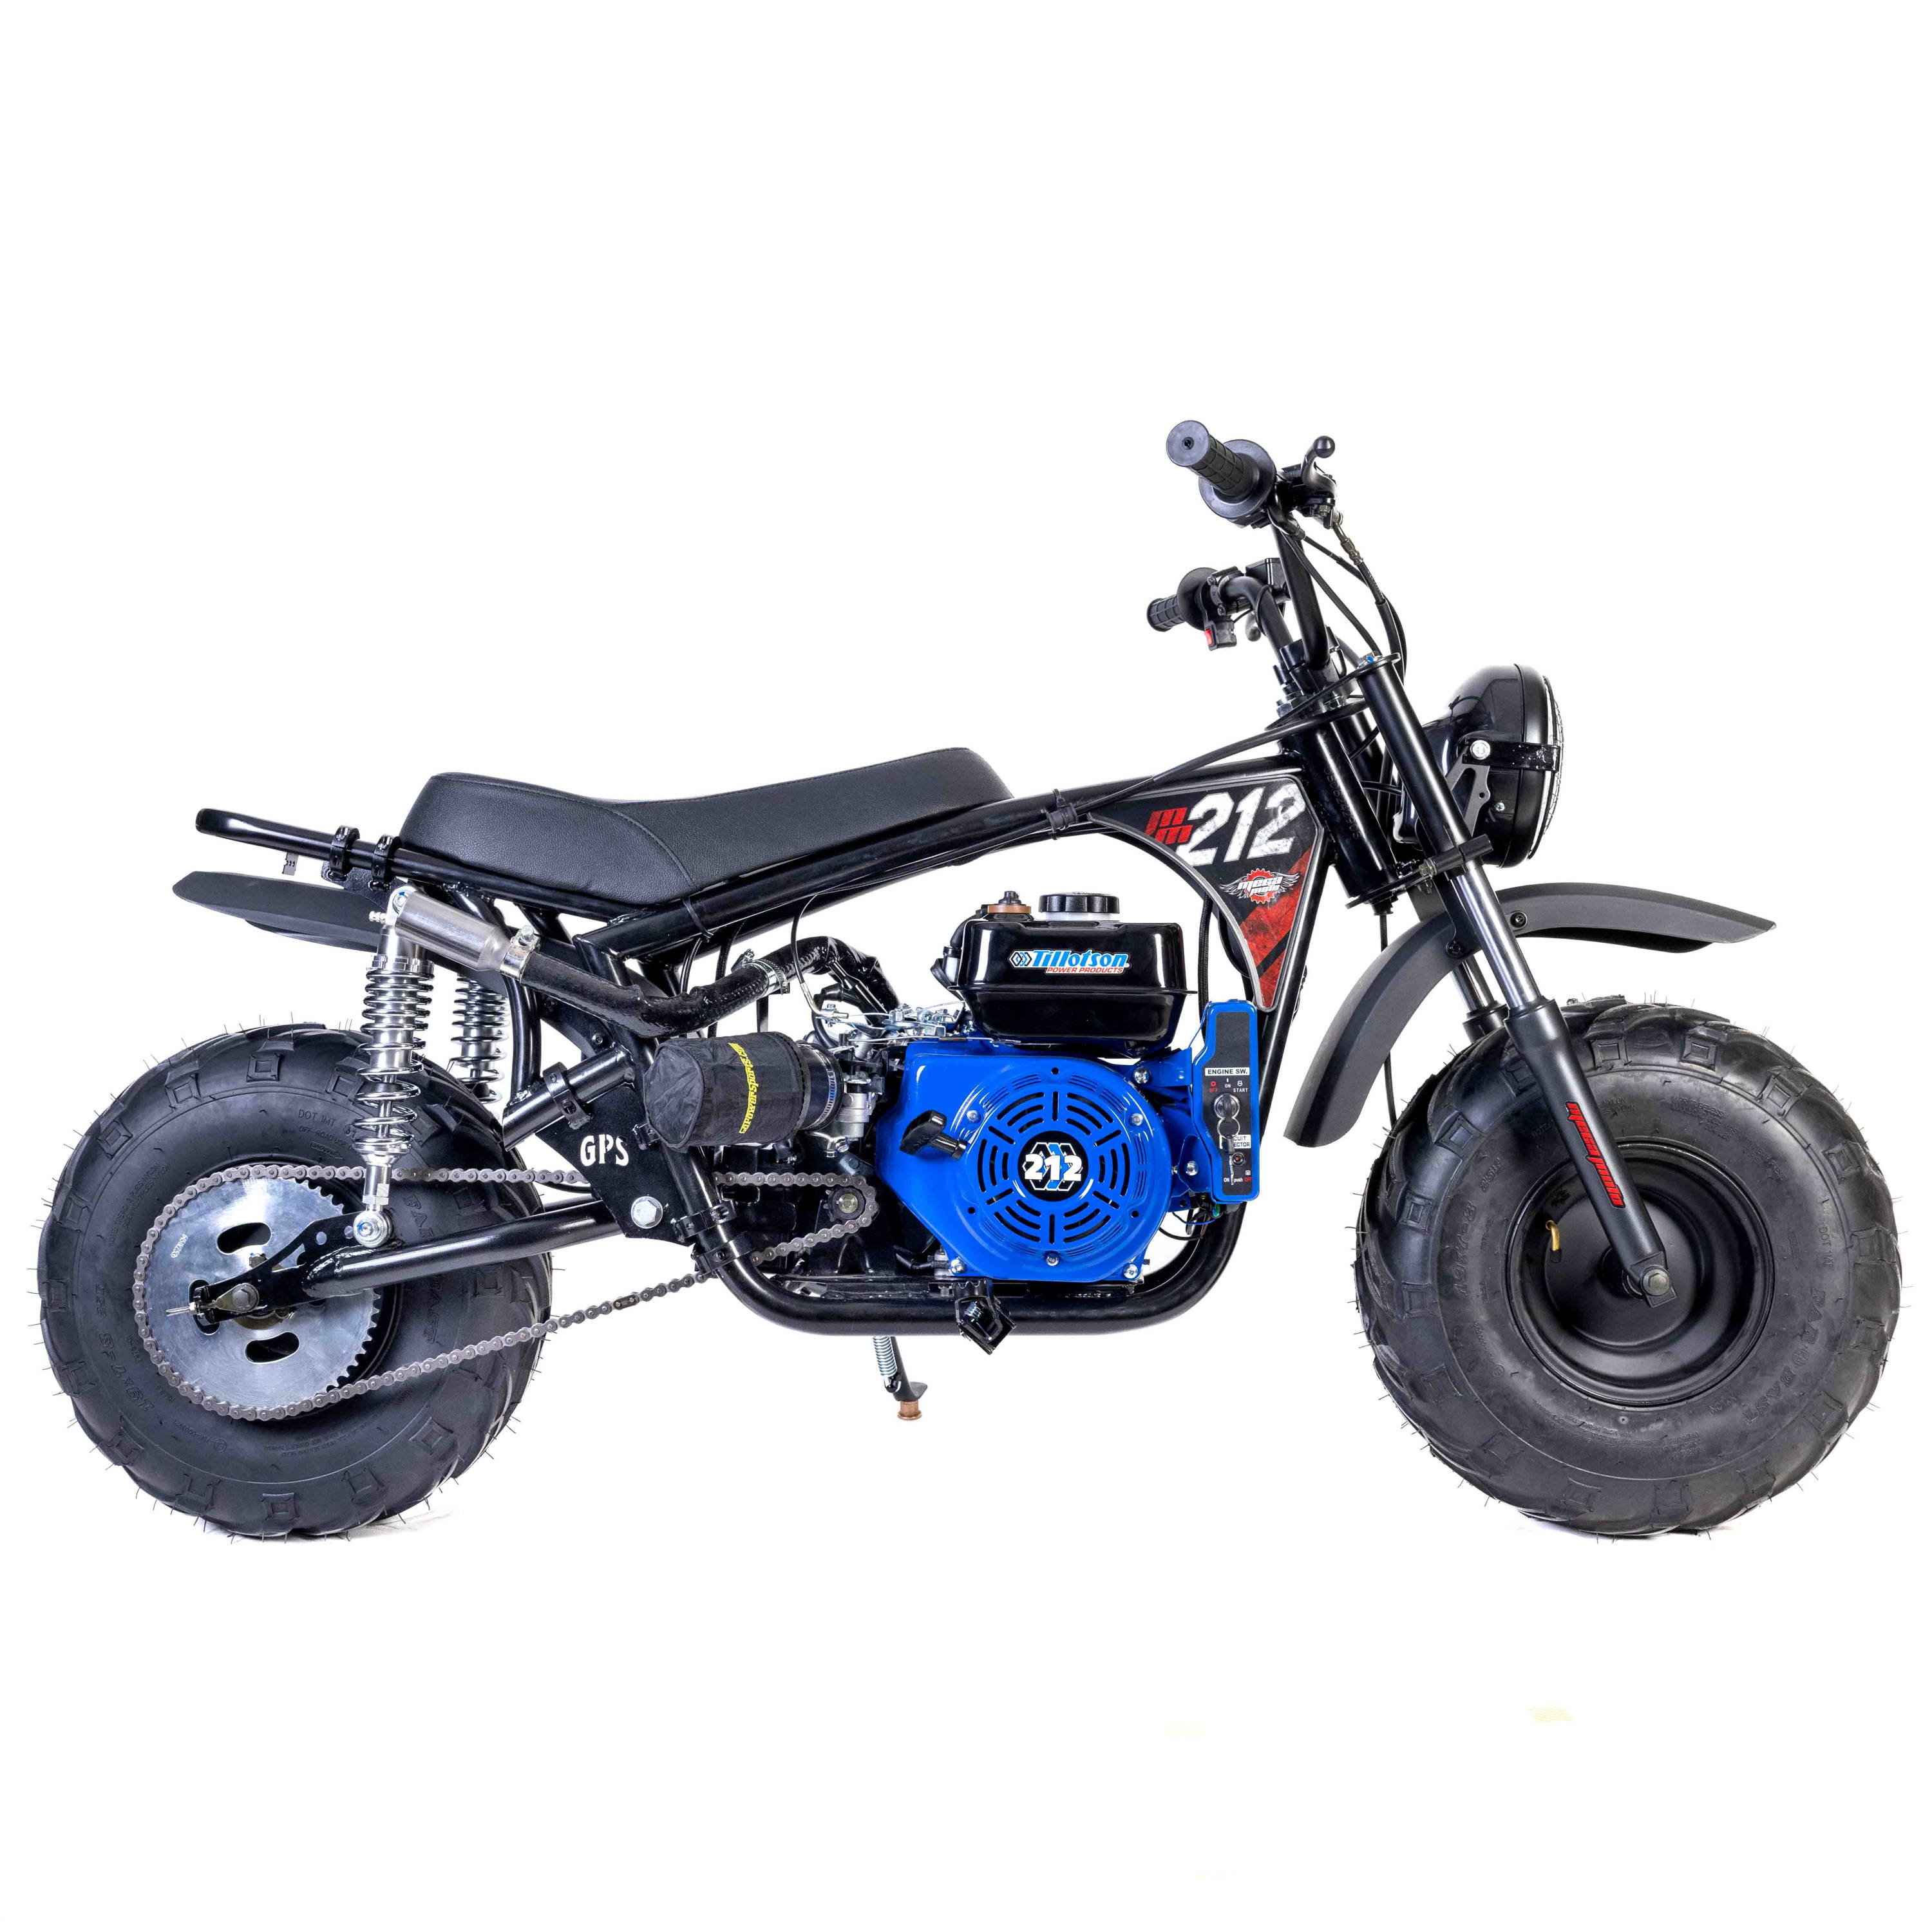 Megalodon Mega Moto 212 Minibike Kit is fully featured